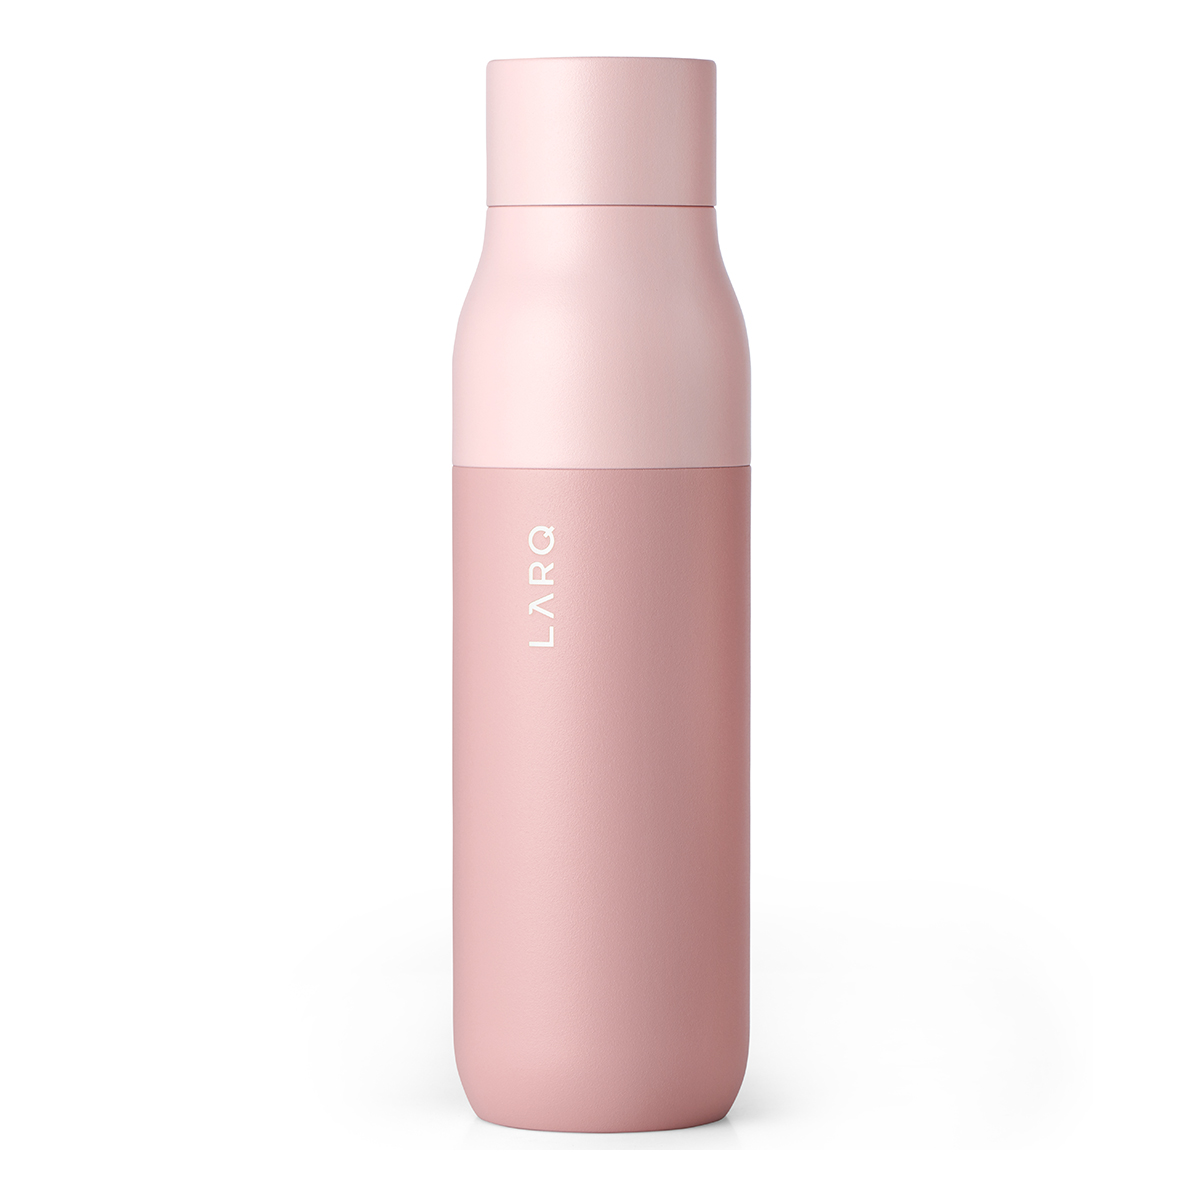 LARQ Self-Cleaning UV Water Bottle